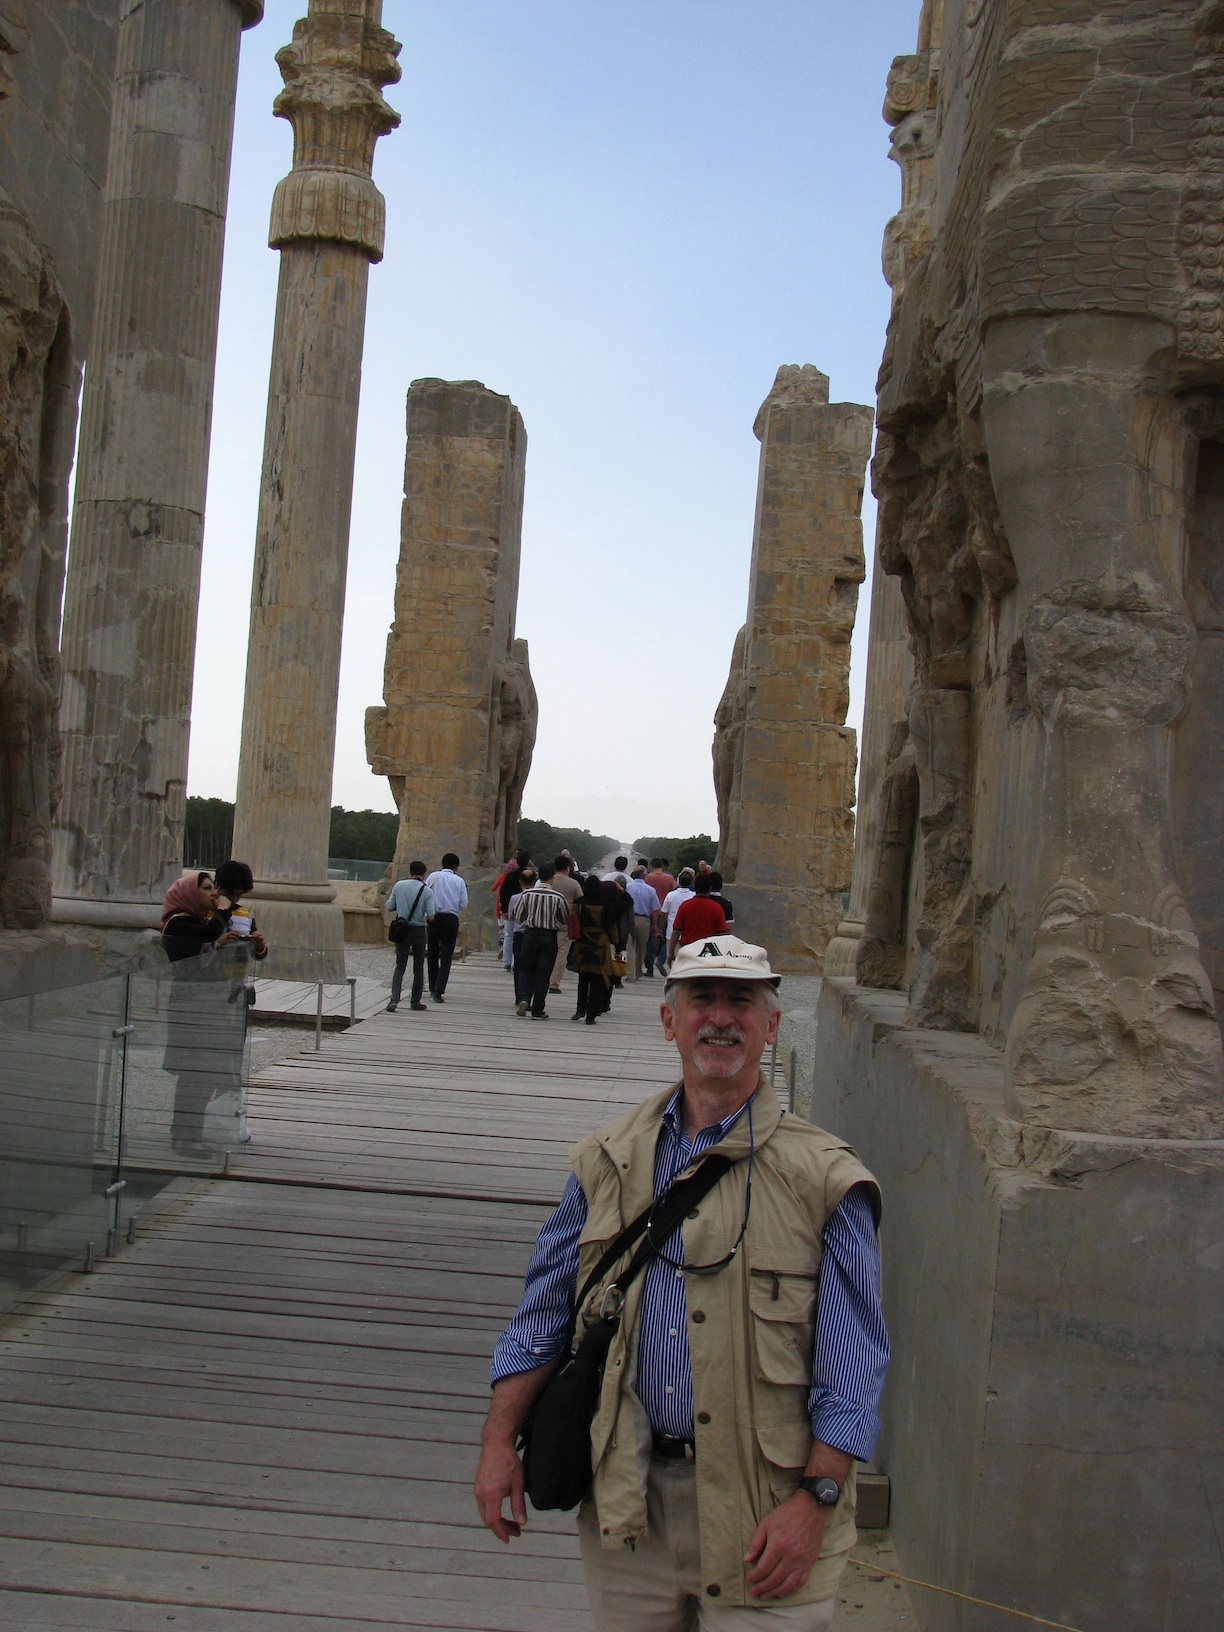 Fred at Persepolis